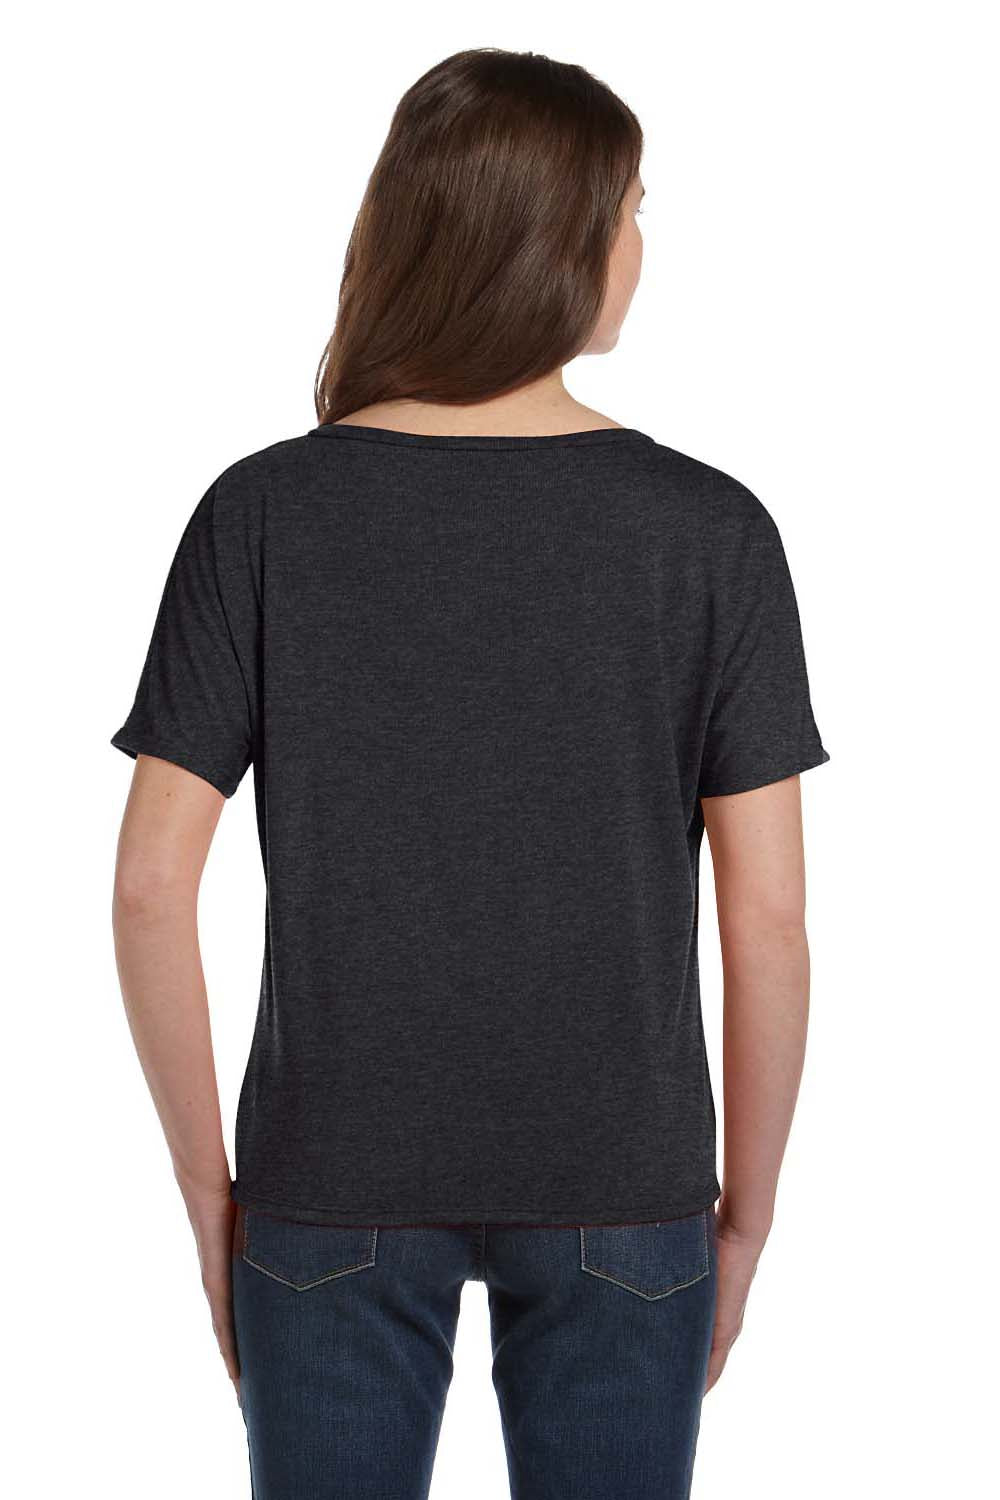 Bella + Canvas 8815 Womens Slouchy Short Sleeve V-Neck T-Shirt Heather Dark Grey Back